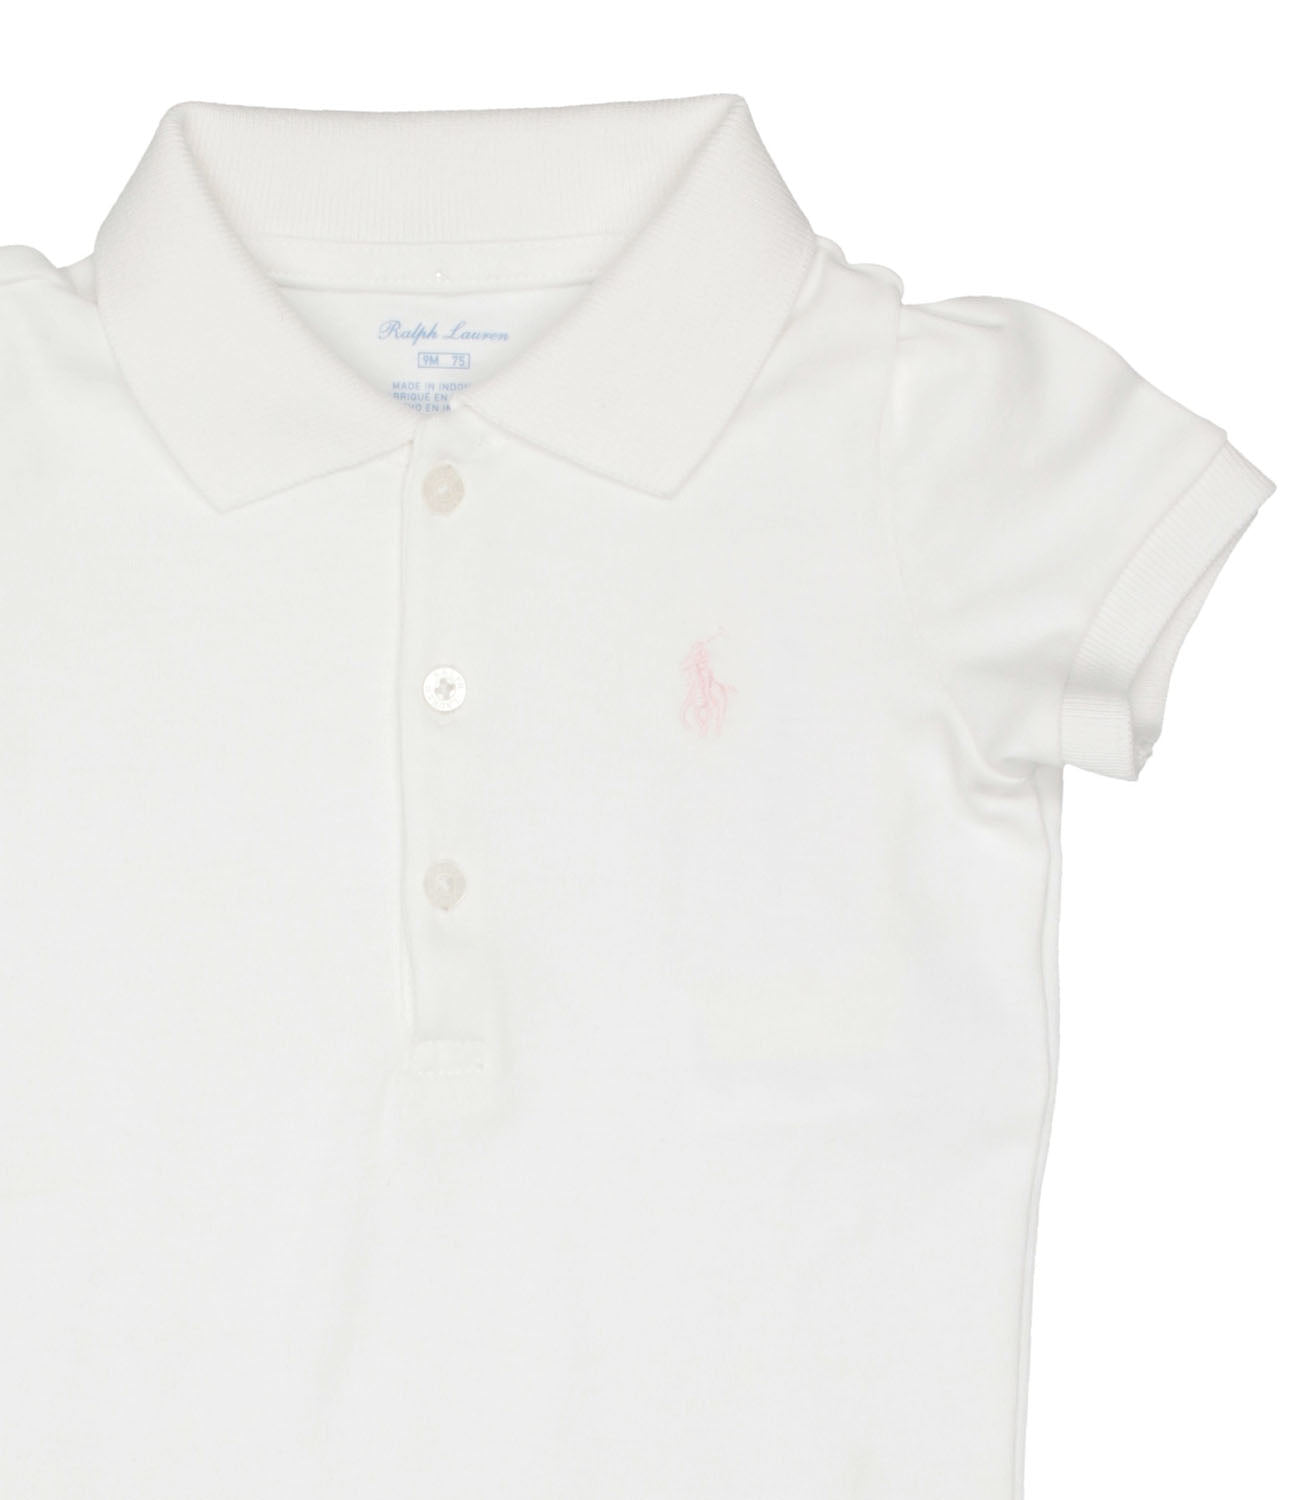 Ralph Lauren Childrenswear | Body Bianco